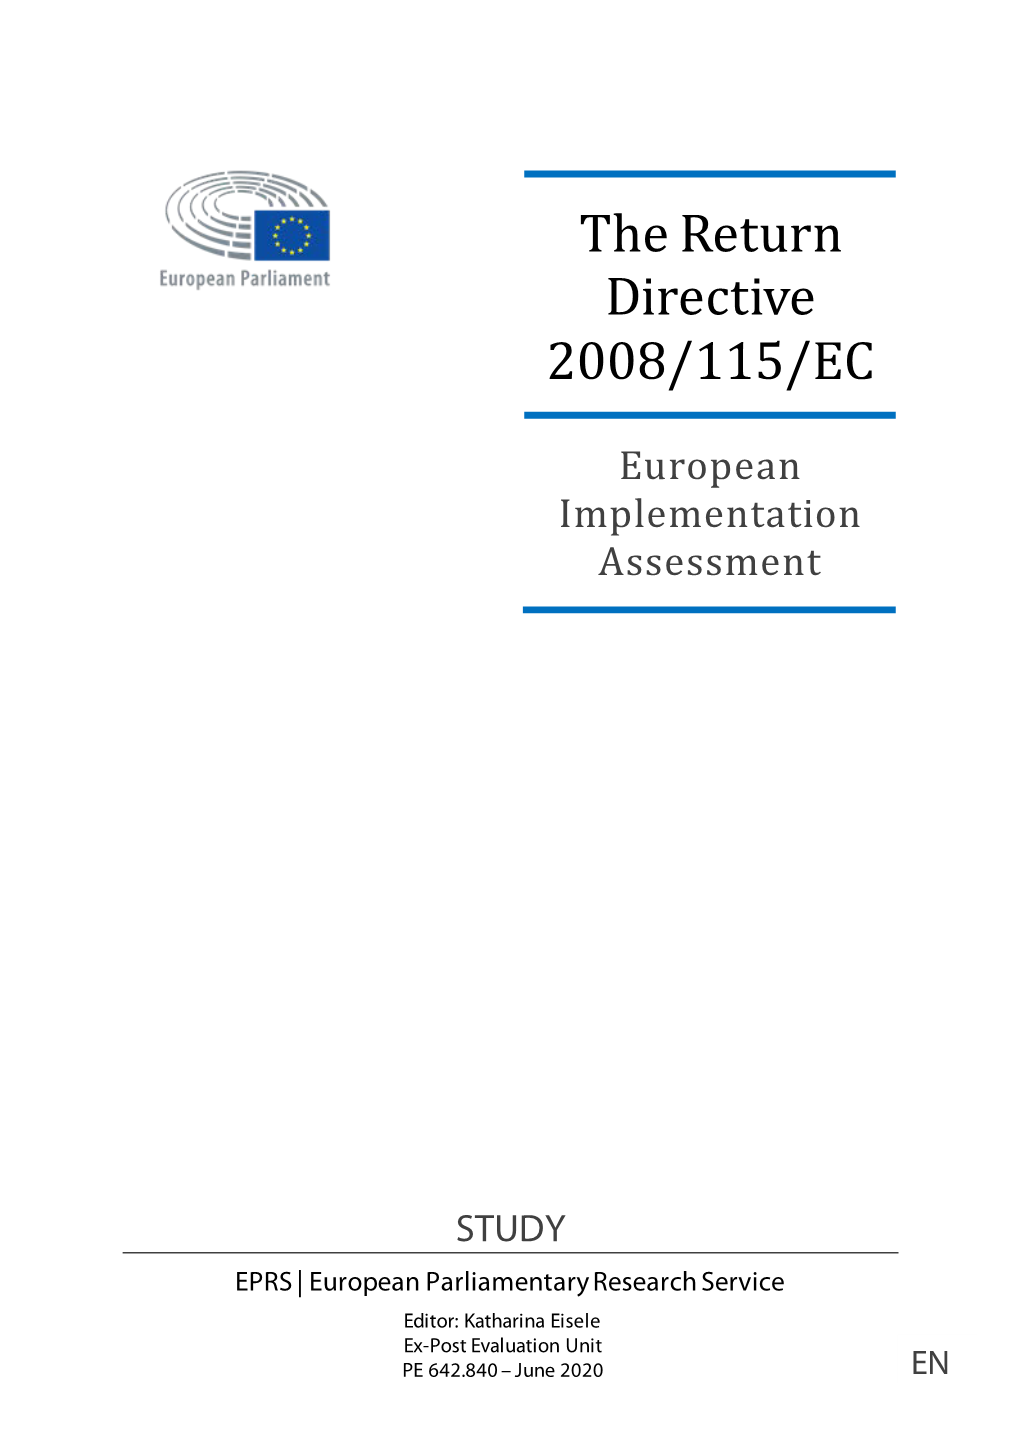 The Return Directive 2008/115/EC